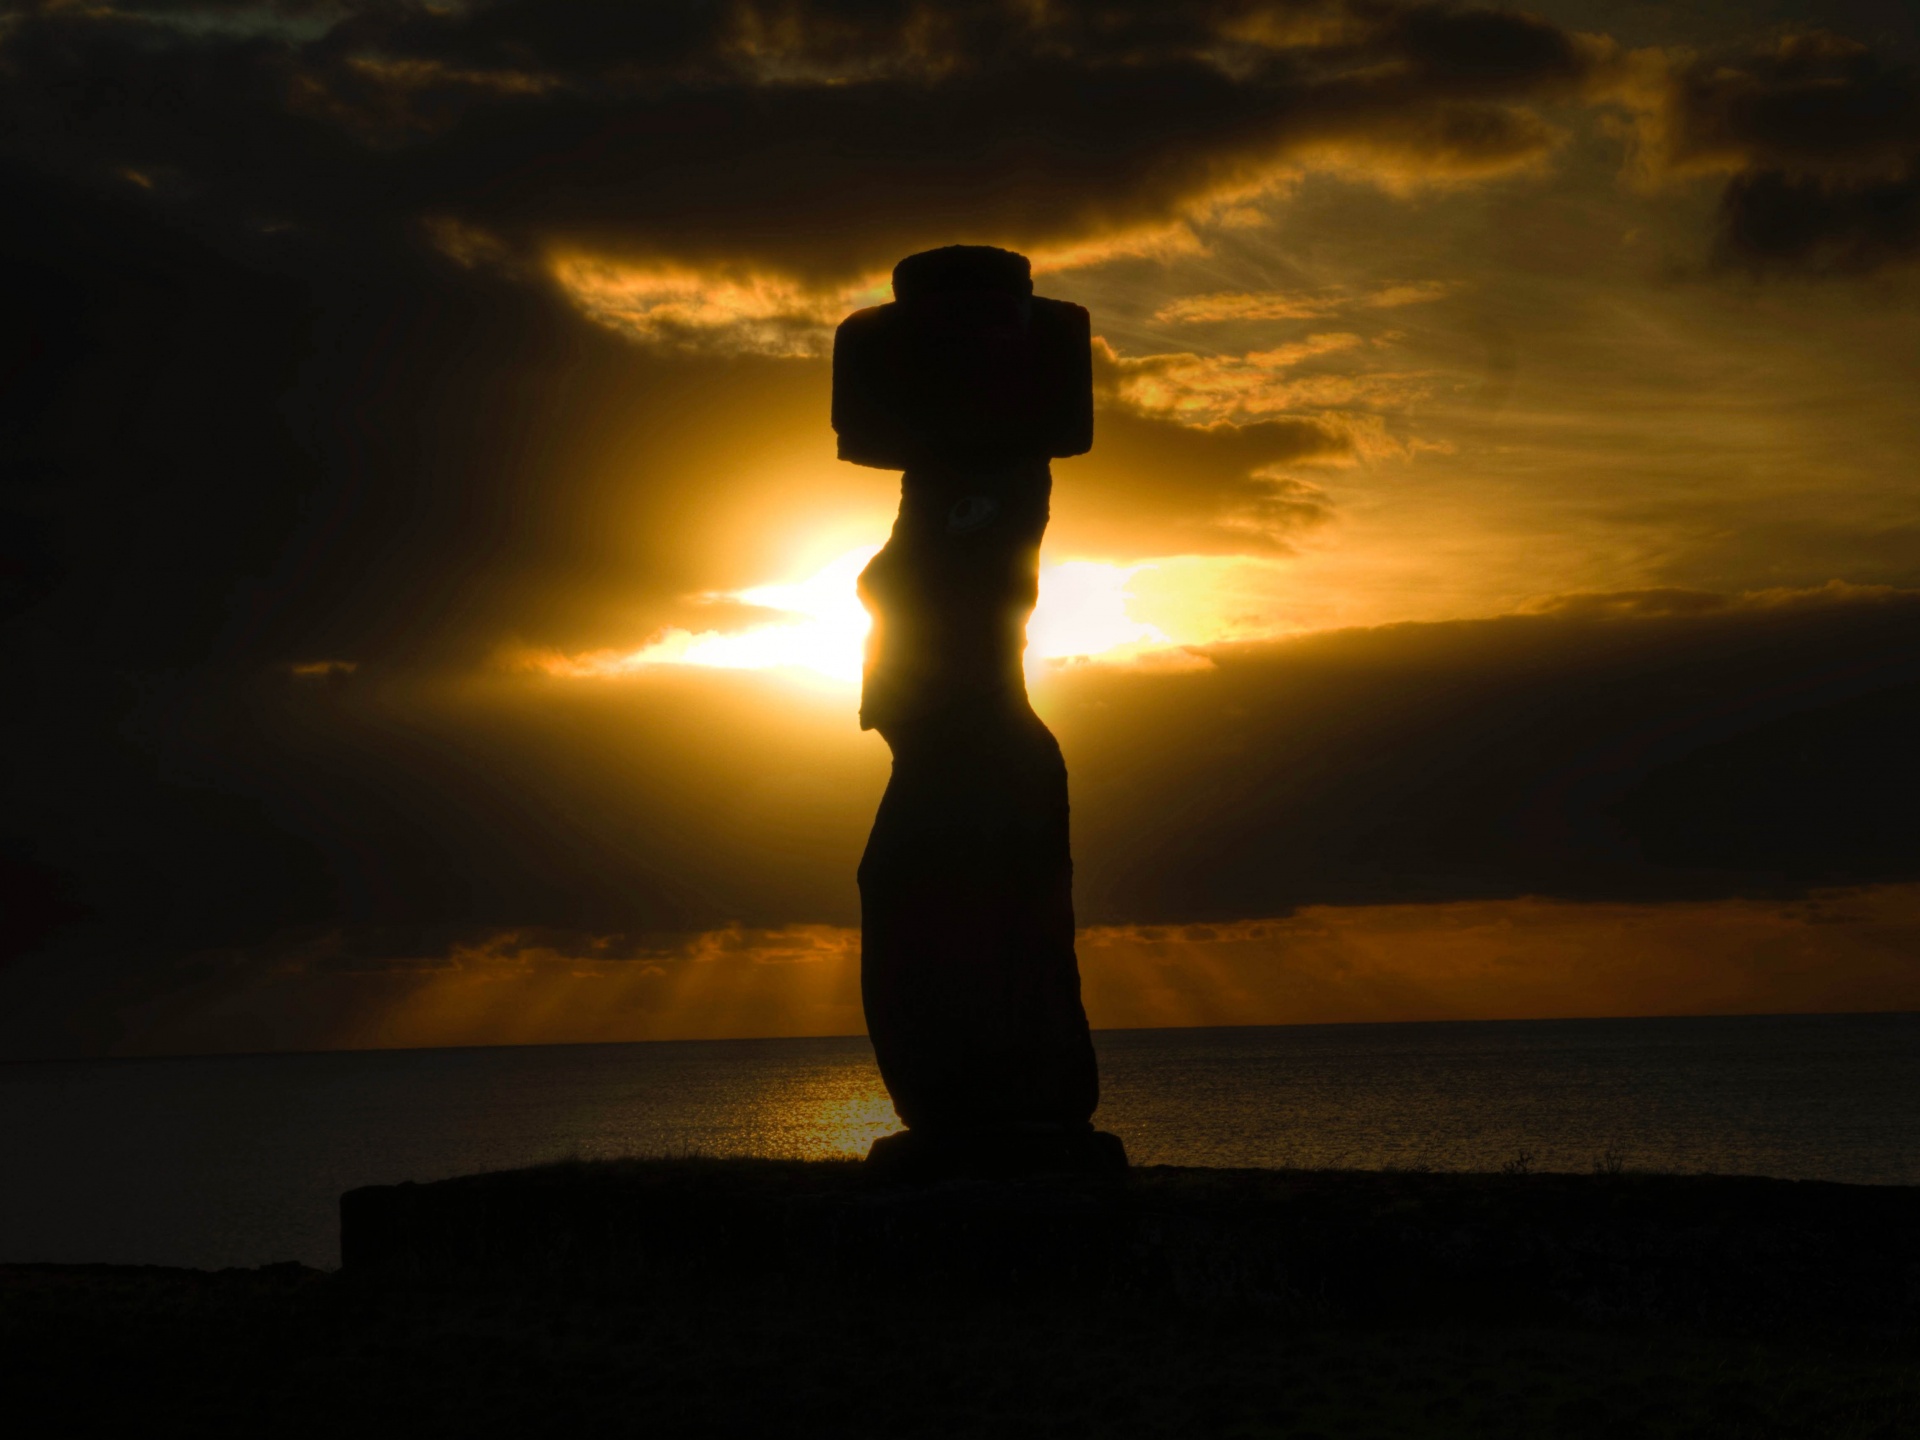 Easter Island Image Background Photos Apple Tablet Amazing